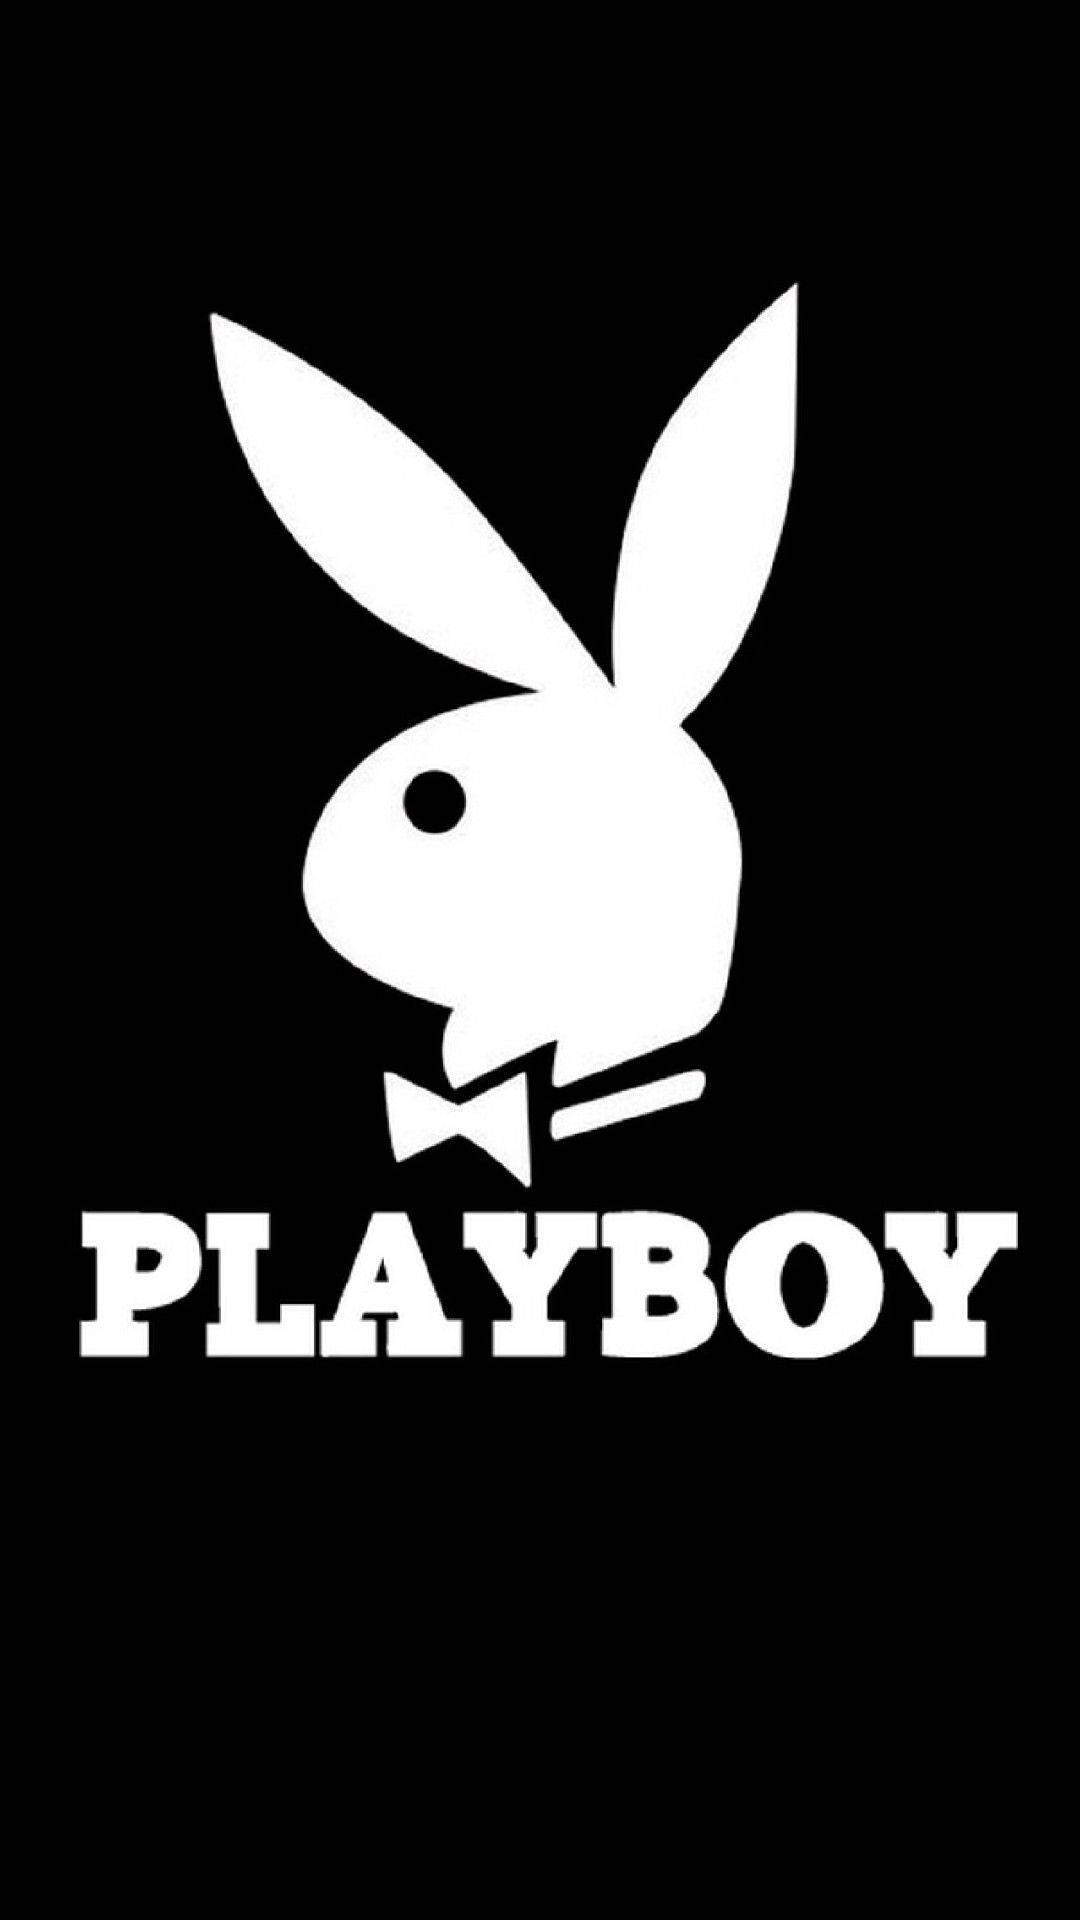 Download Playboy Aesthetic Black White Wallpaper